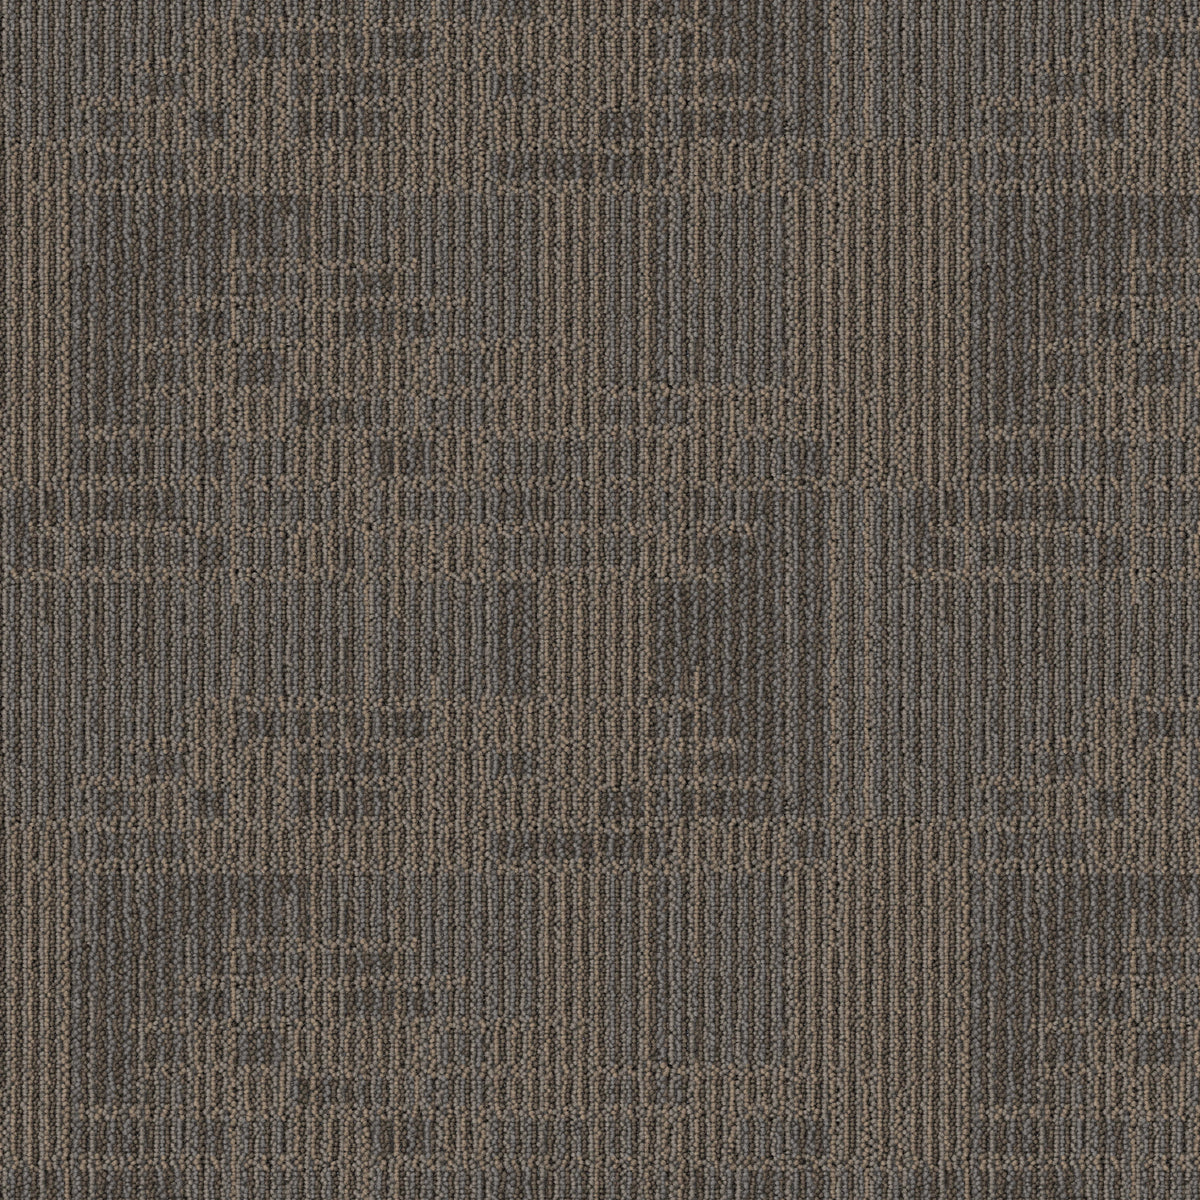 Mohawk Group - Bending Earth - Caliber - Commercial Carpet Tile - Shale